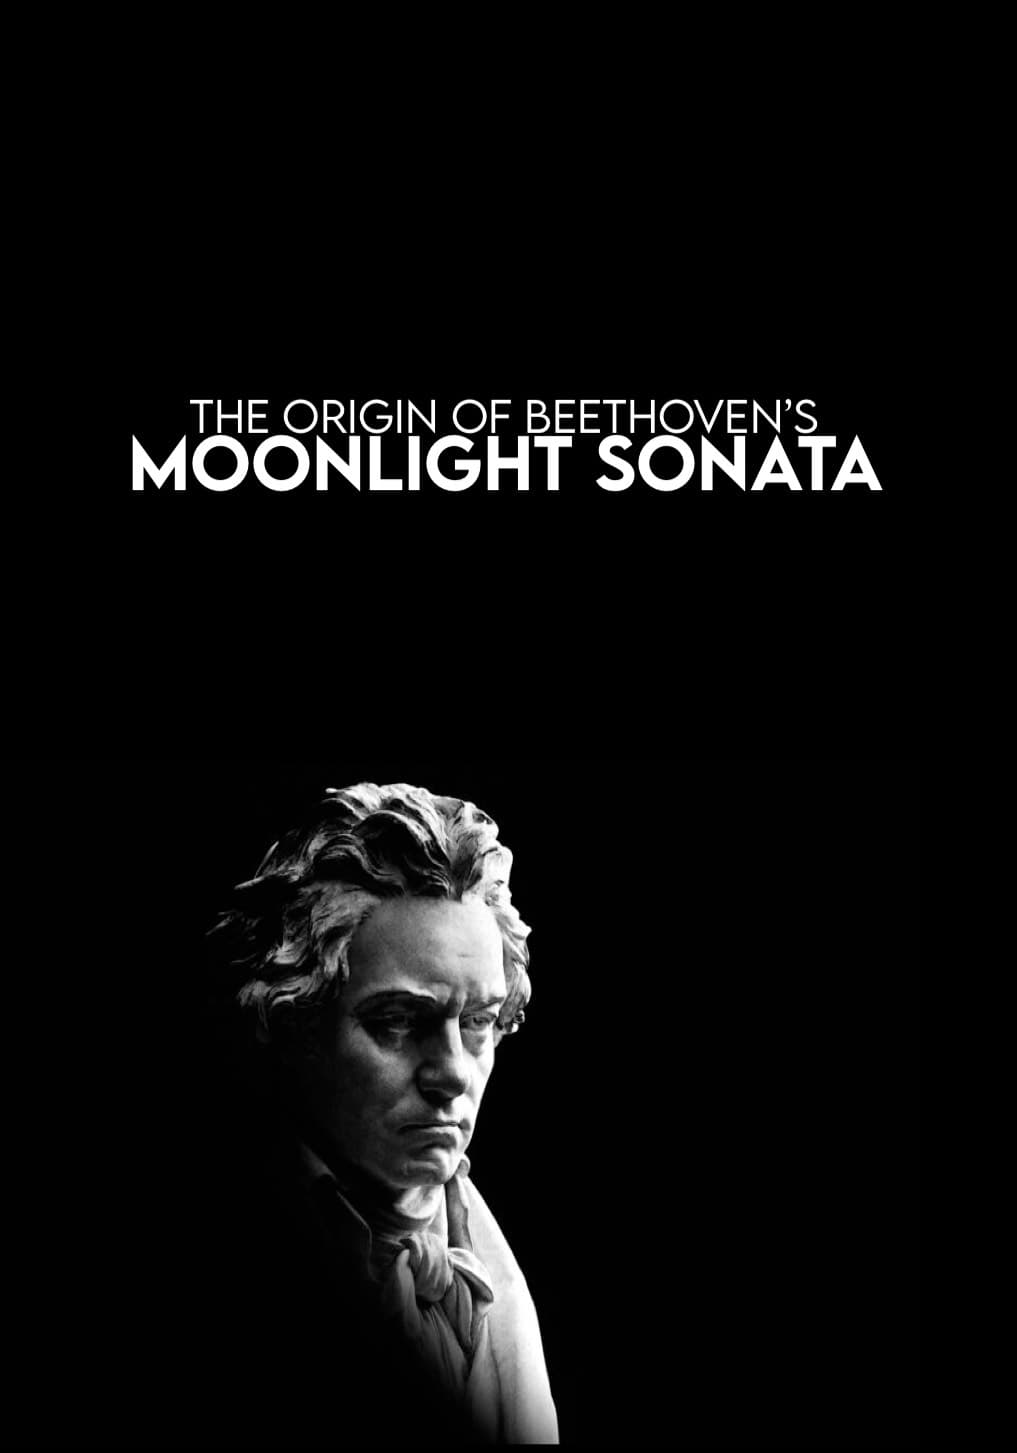 The Origin of Beethoven's Moonlight Sonata